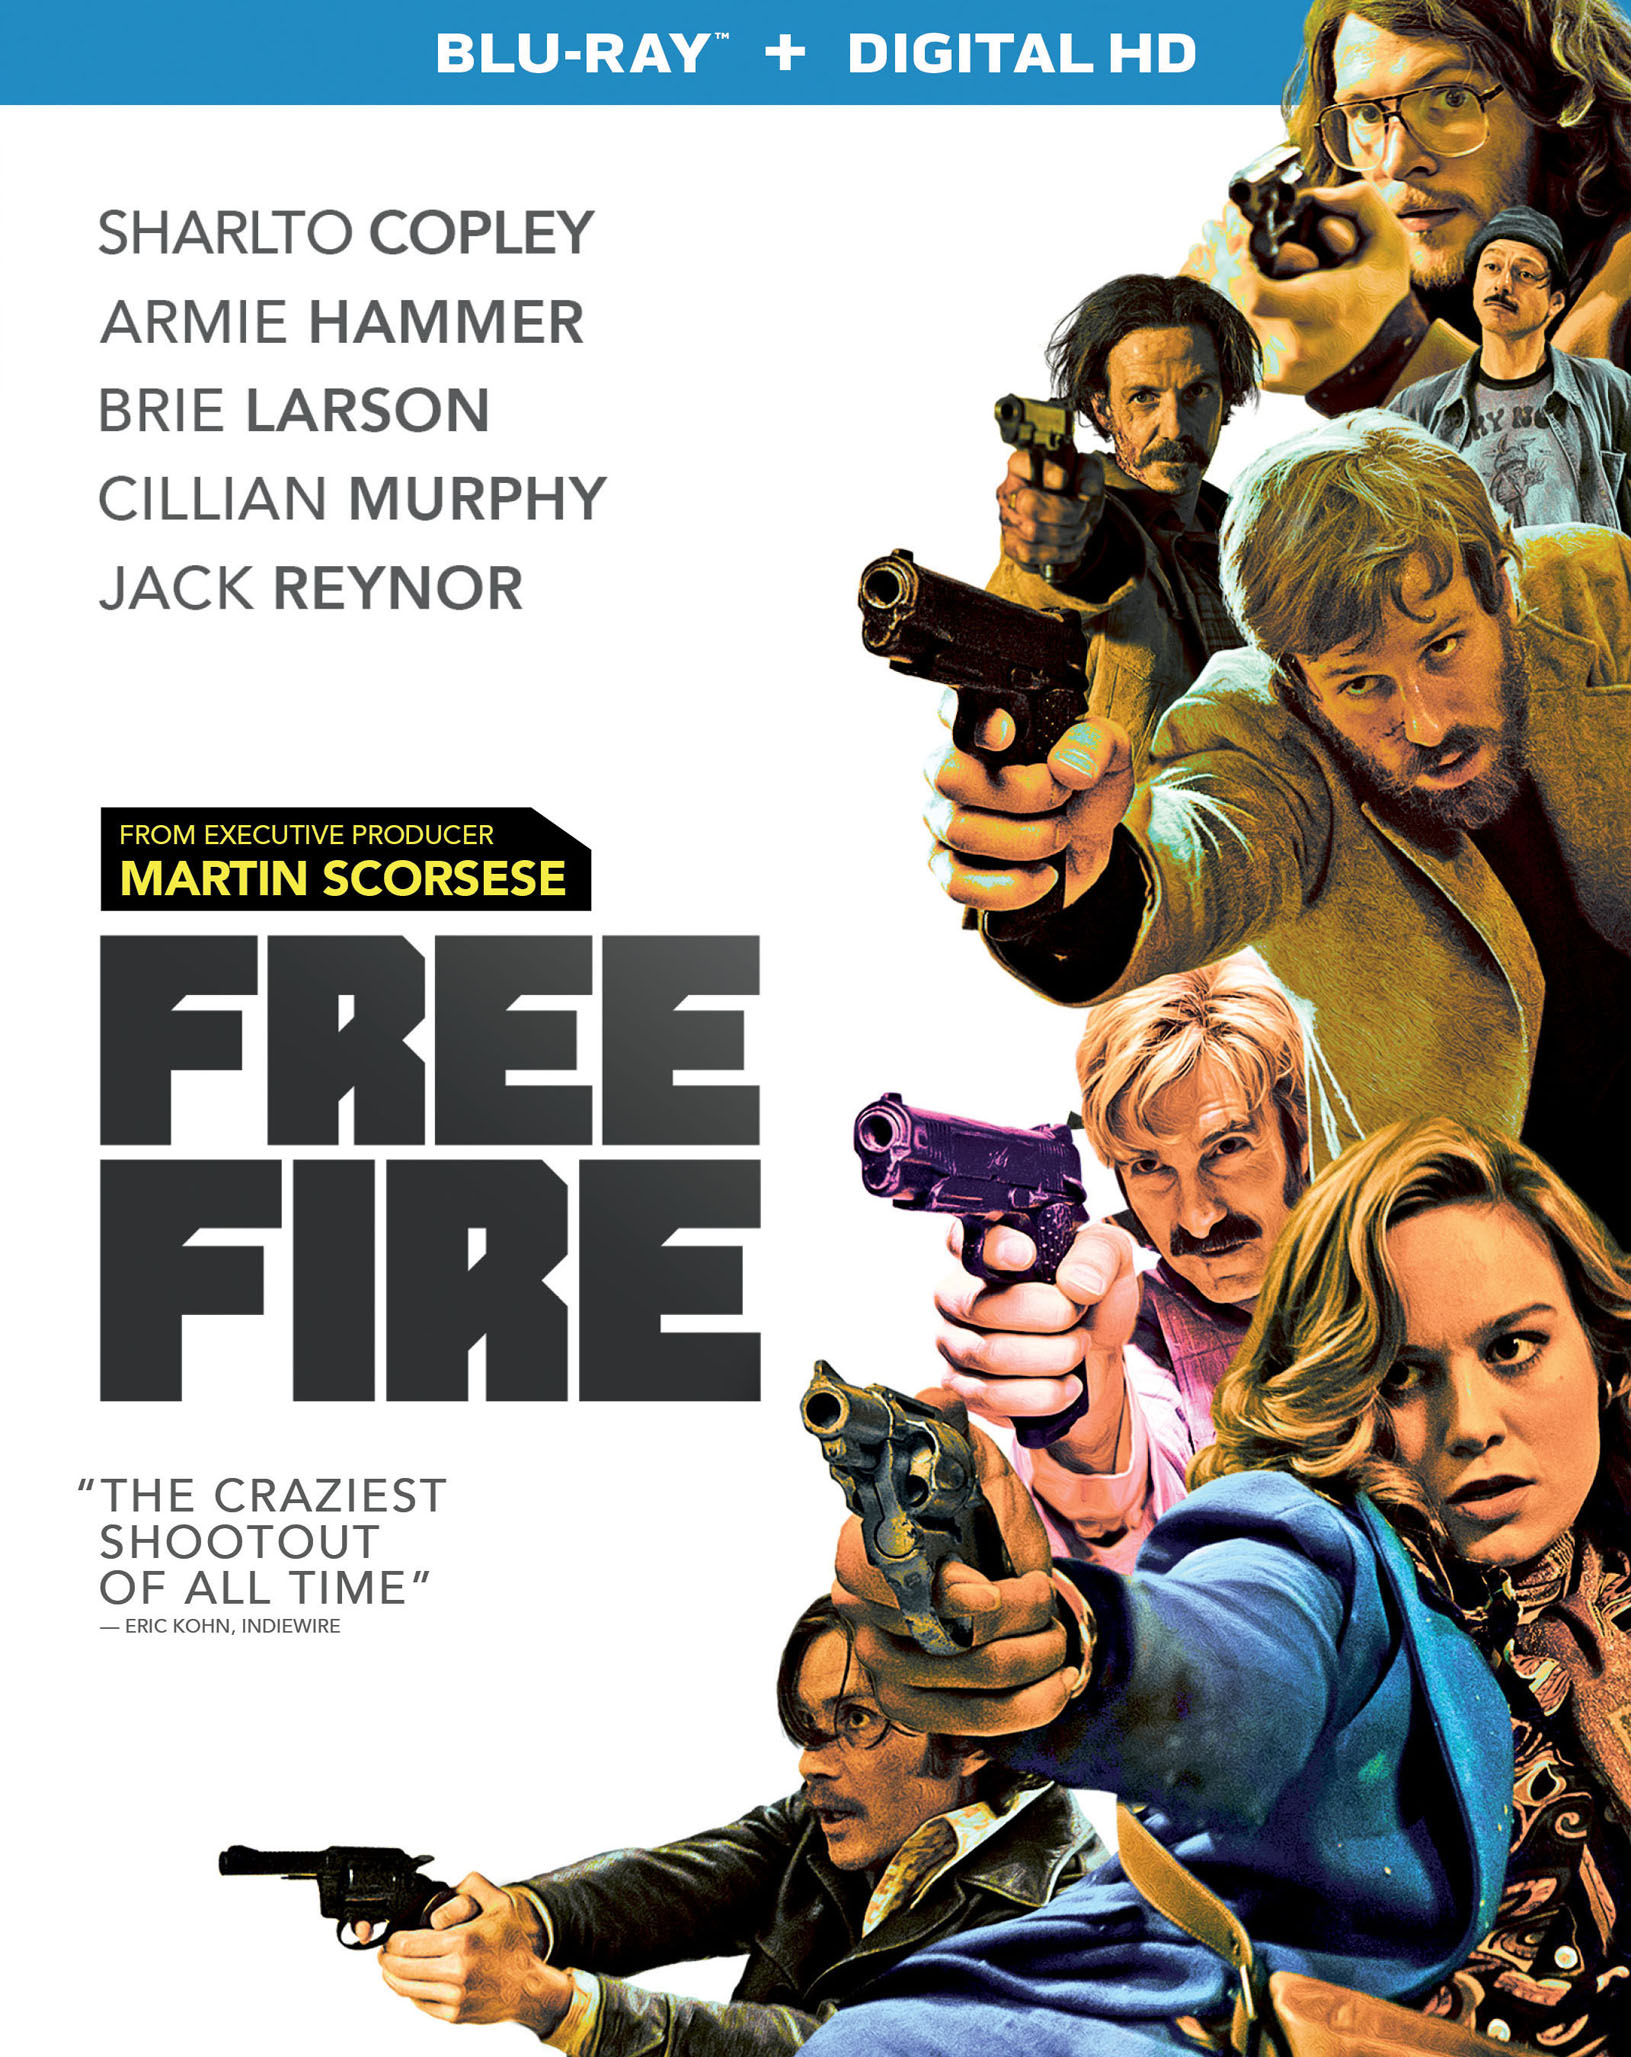 Free Fire (2016)  Take Cinema Magazine